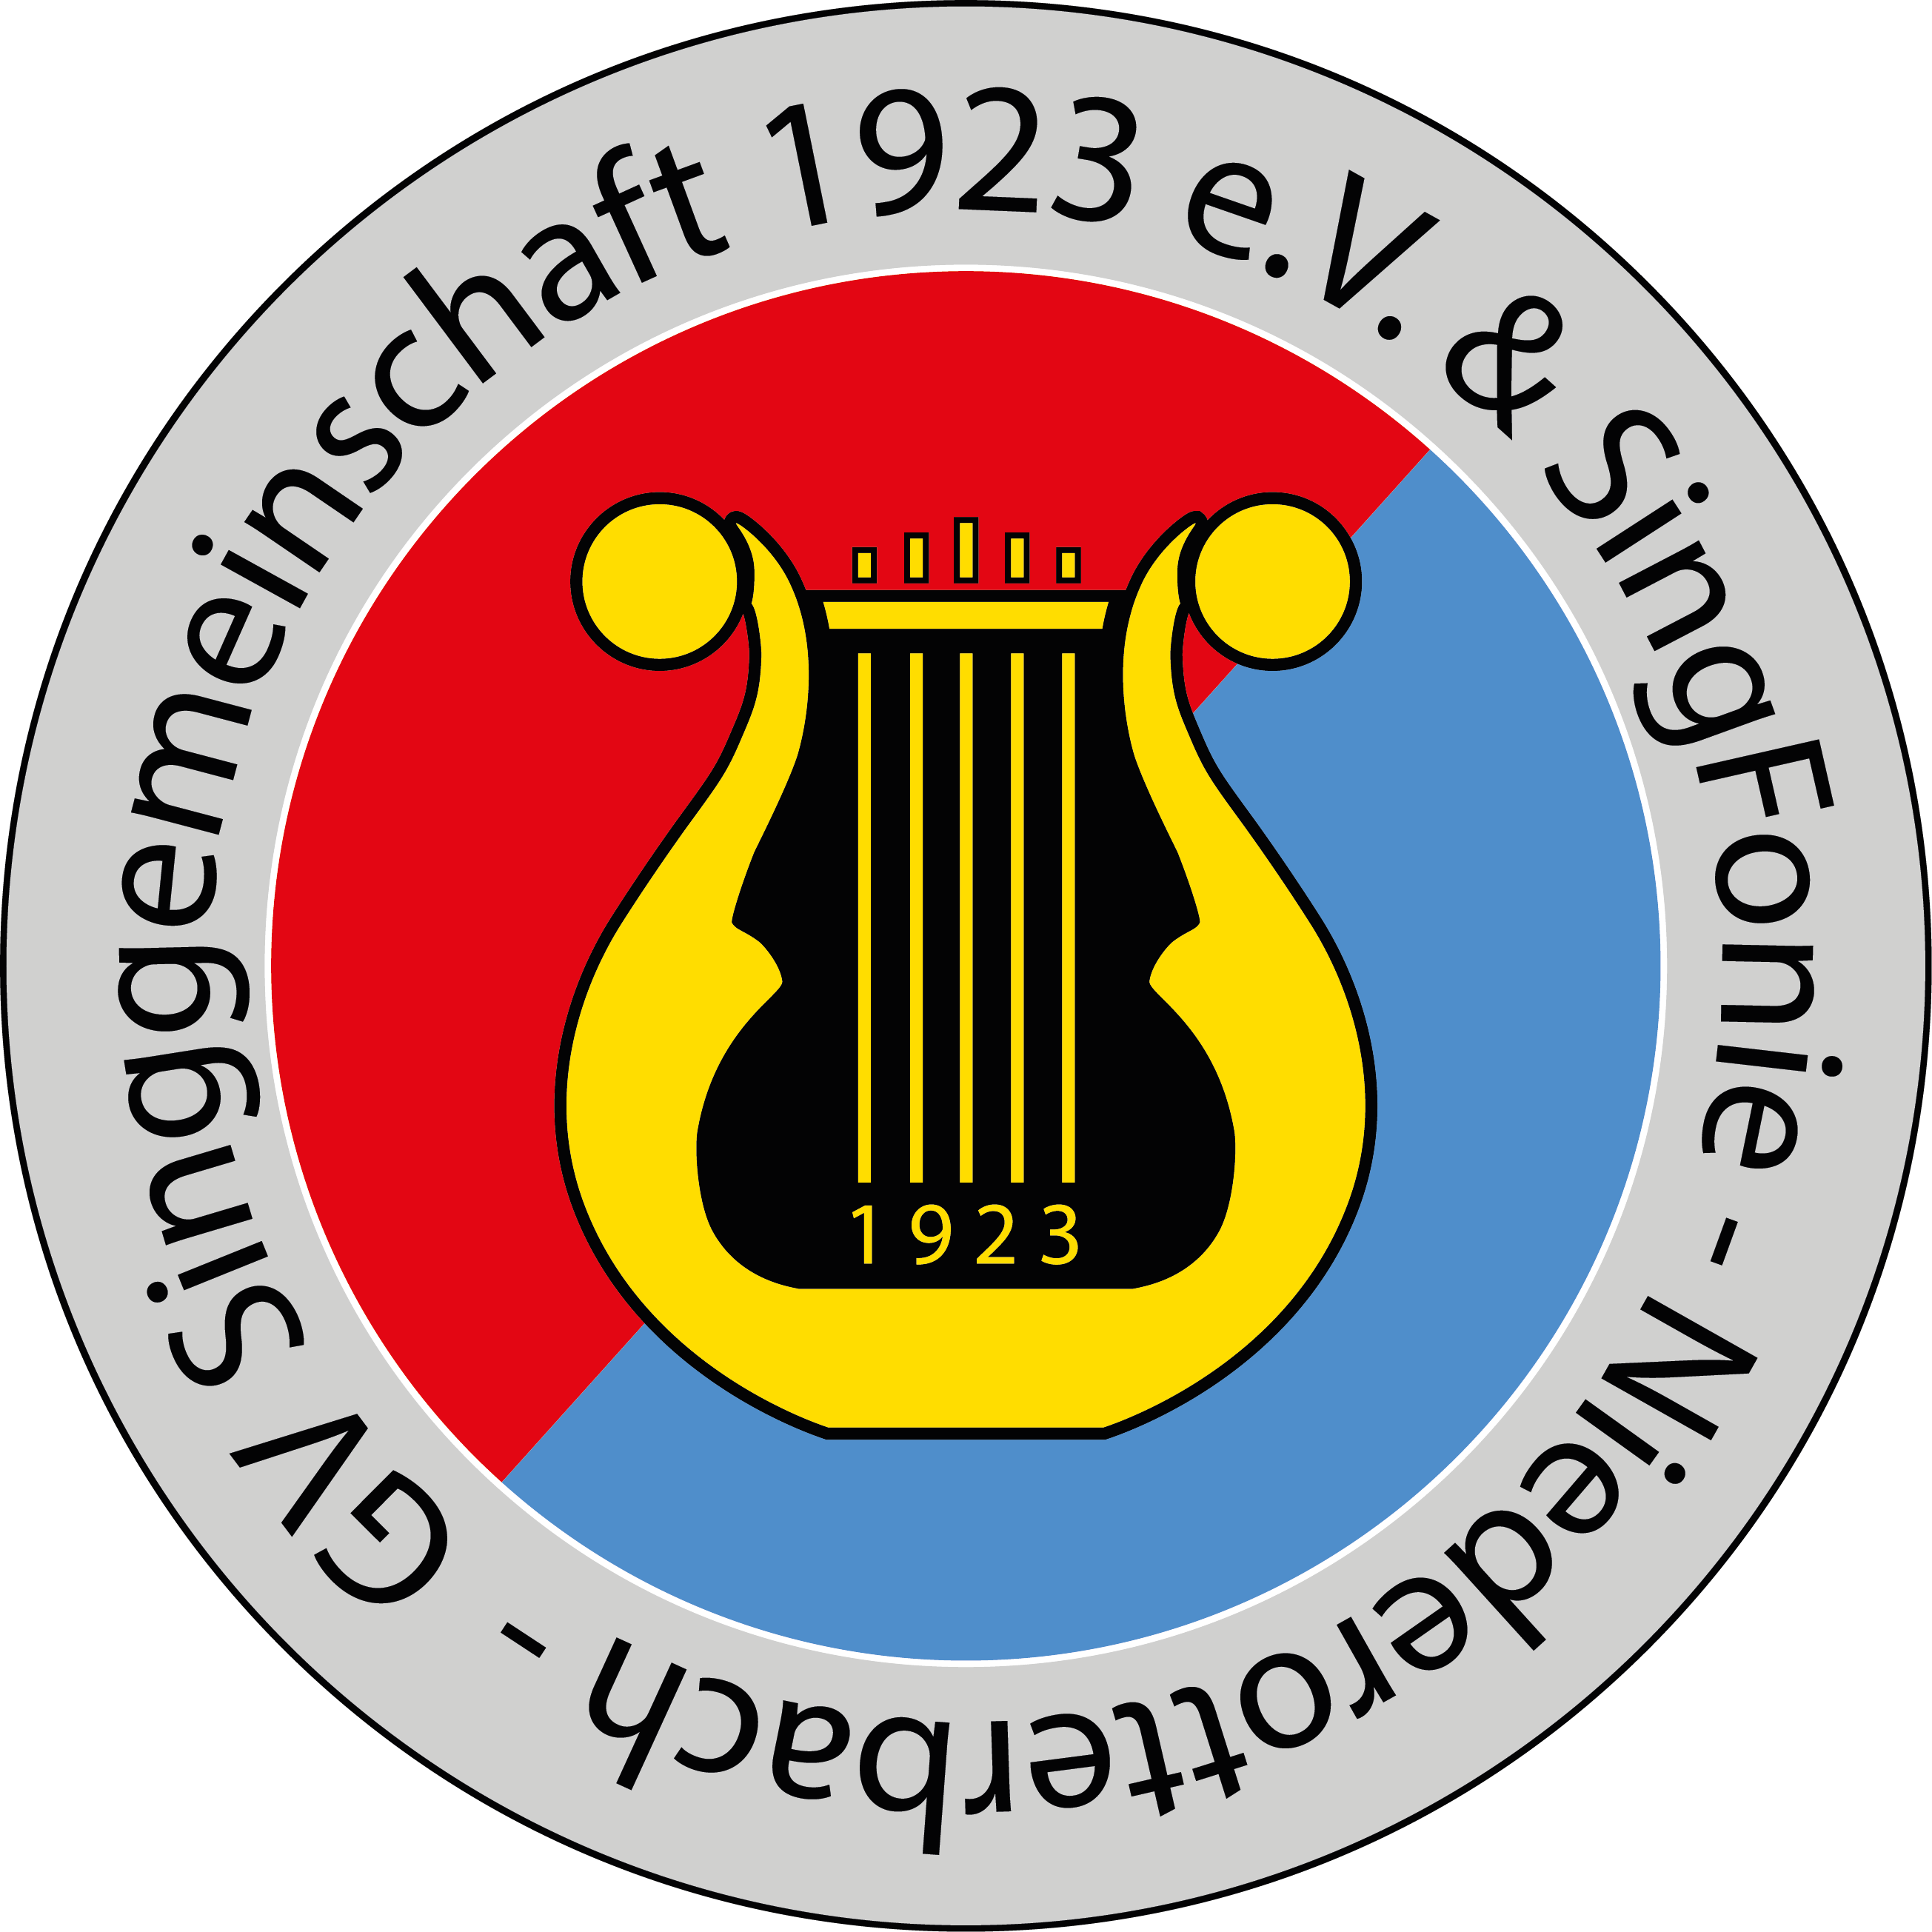 GV-Singgemeinschaft 1923 e.V. & SingFonie – Niederotterbach